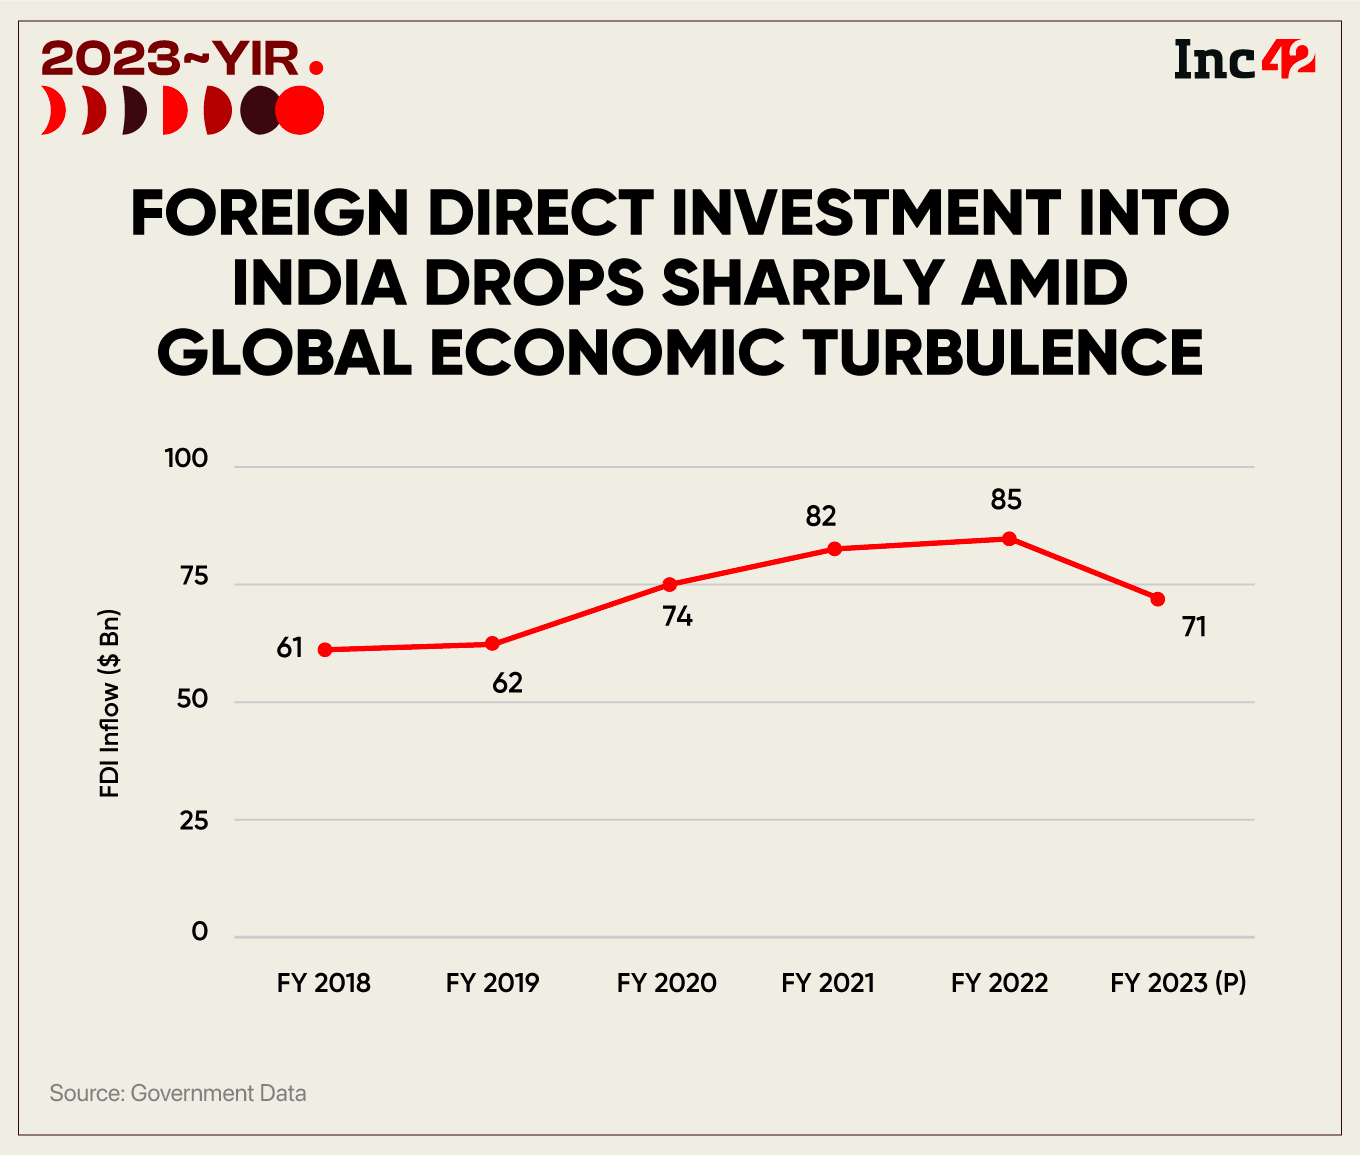 FDI inflow trends over the recent few years